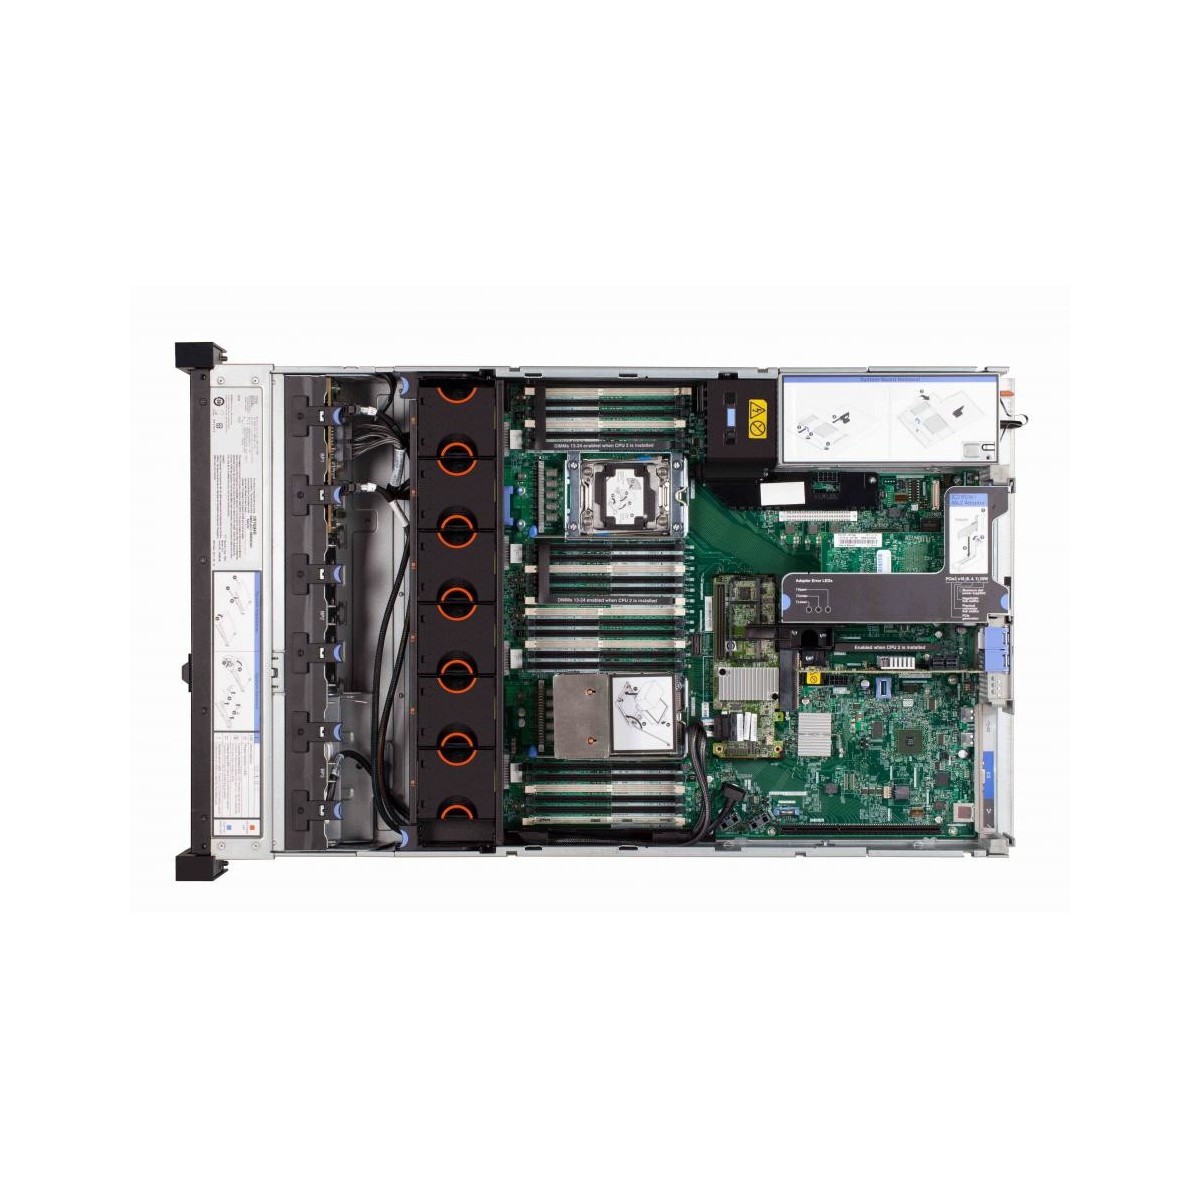 Lenovo System x3650 M5 - 2.4 GHz - E5-2640V4 - 16 GB - DDR4-SDRAM - 750 W - Rack (2U)